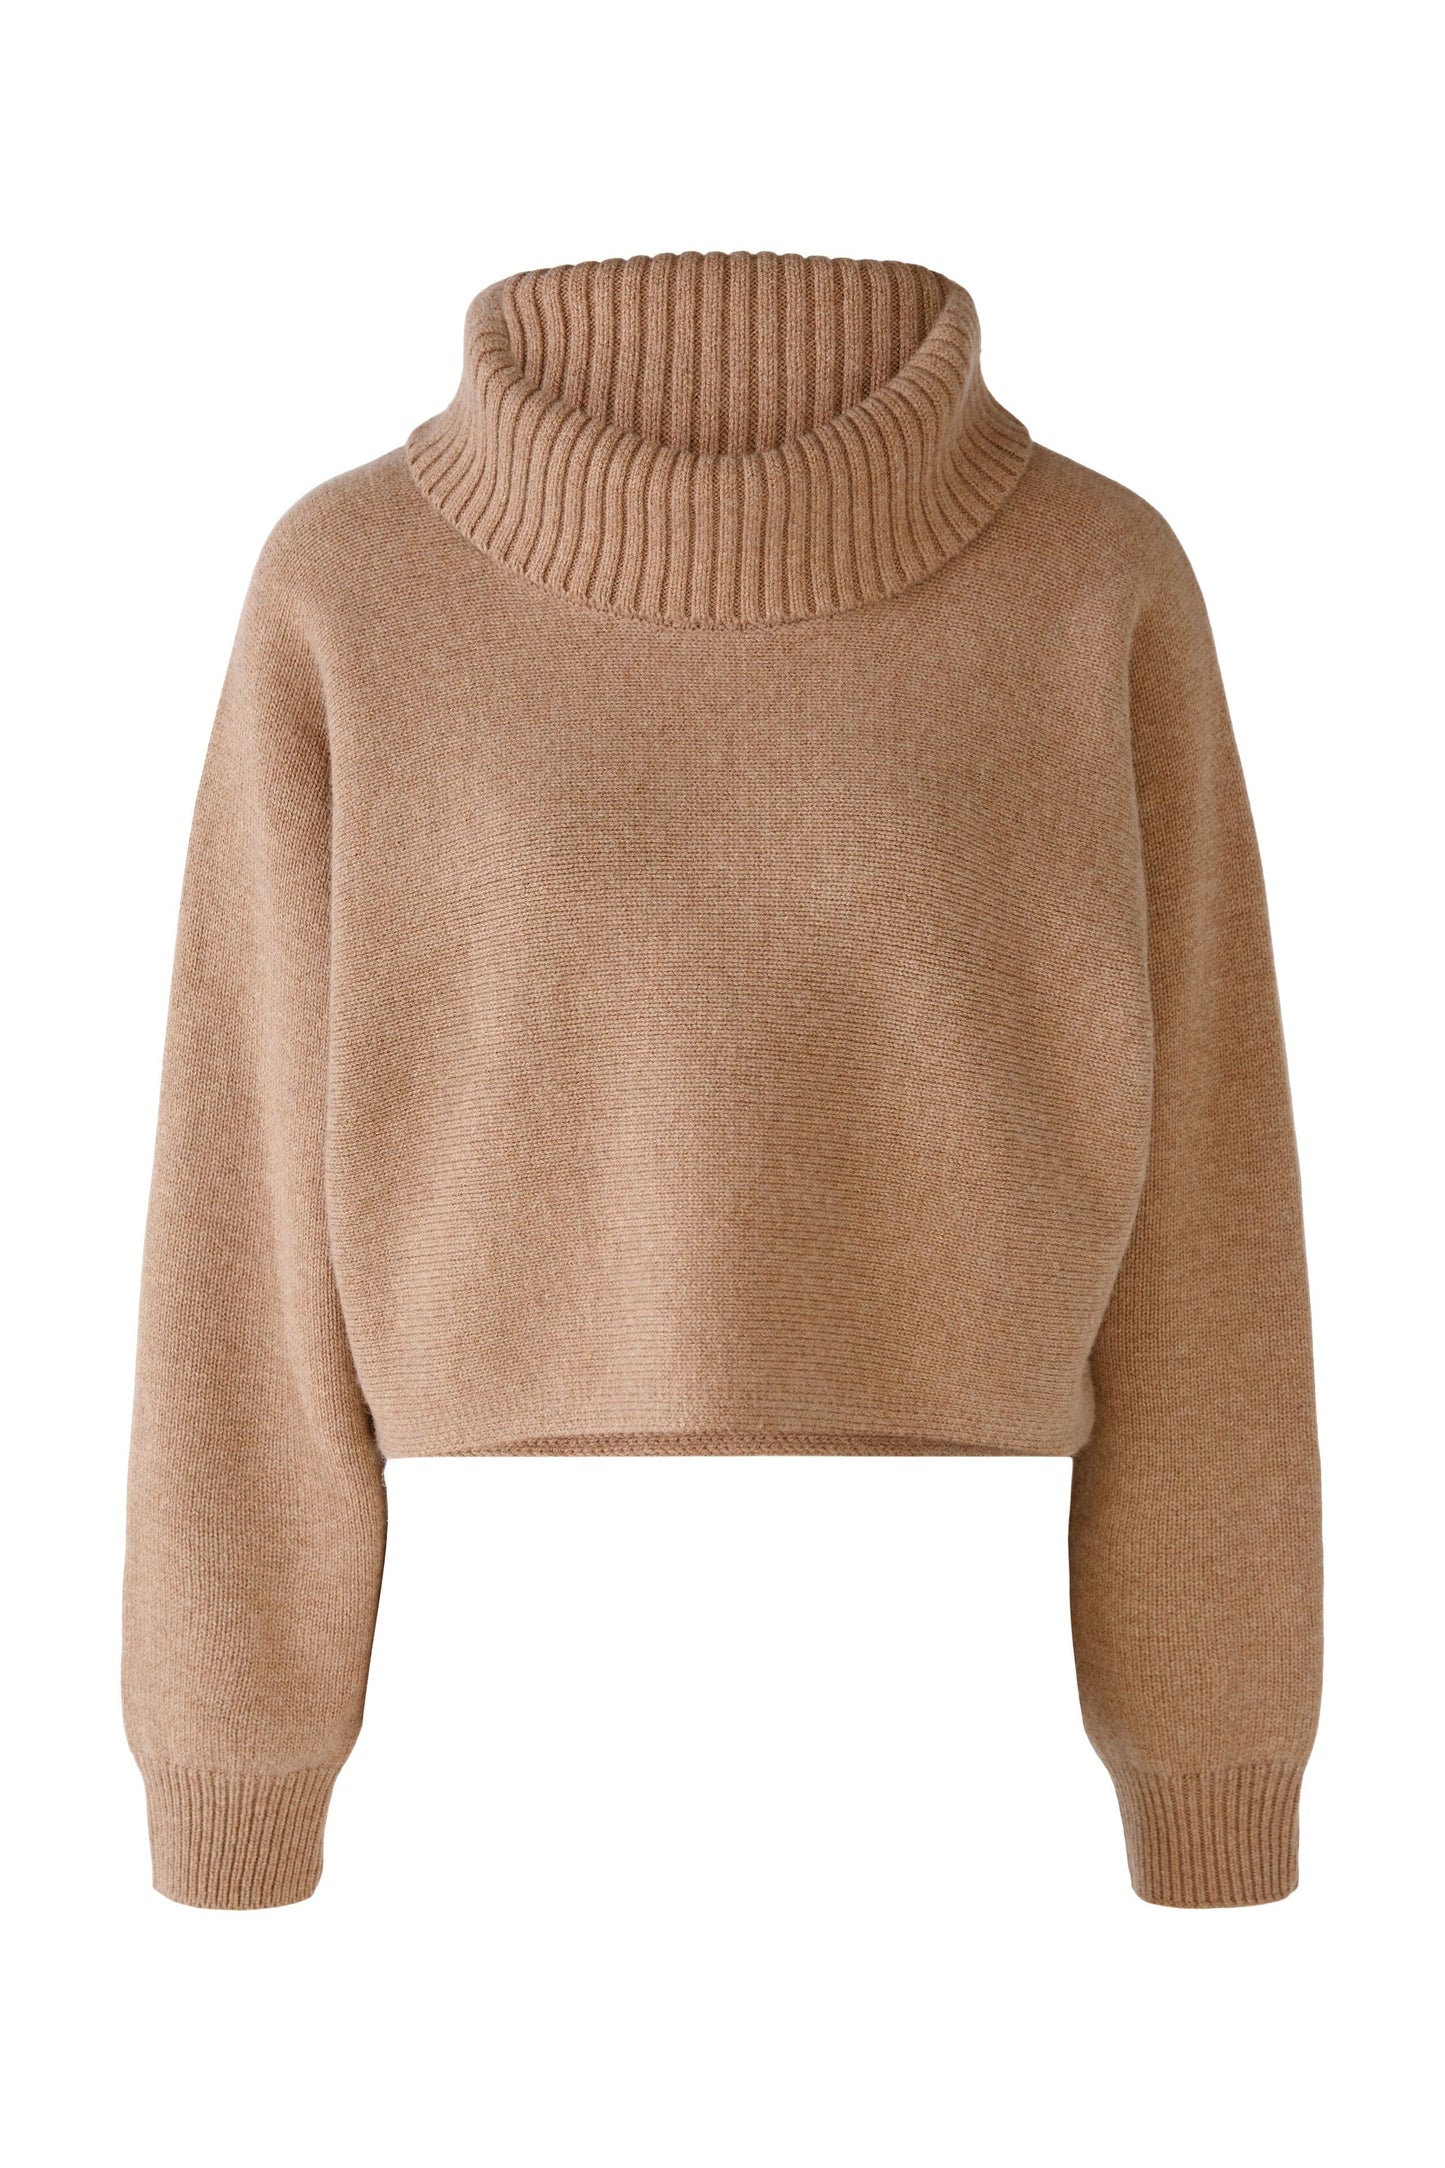 Oui Cropped Sweater